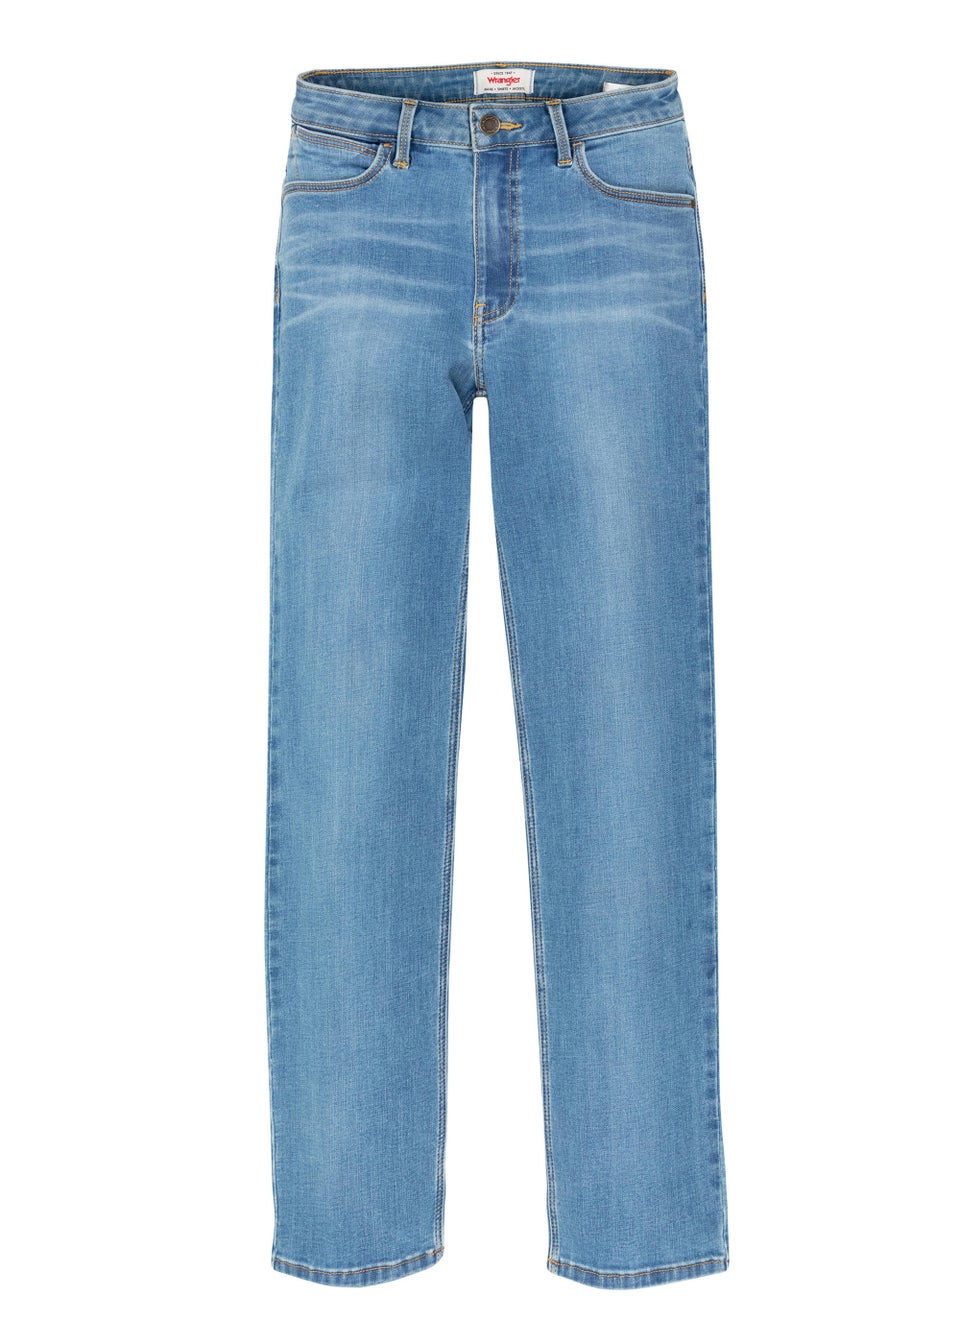 Wrangler Dark Wash Straight Fit Jeans - Matalan